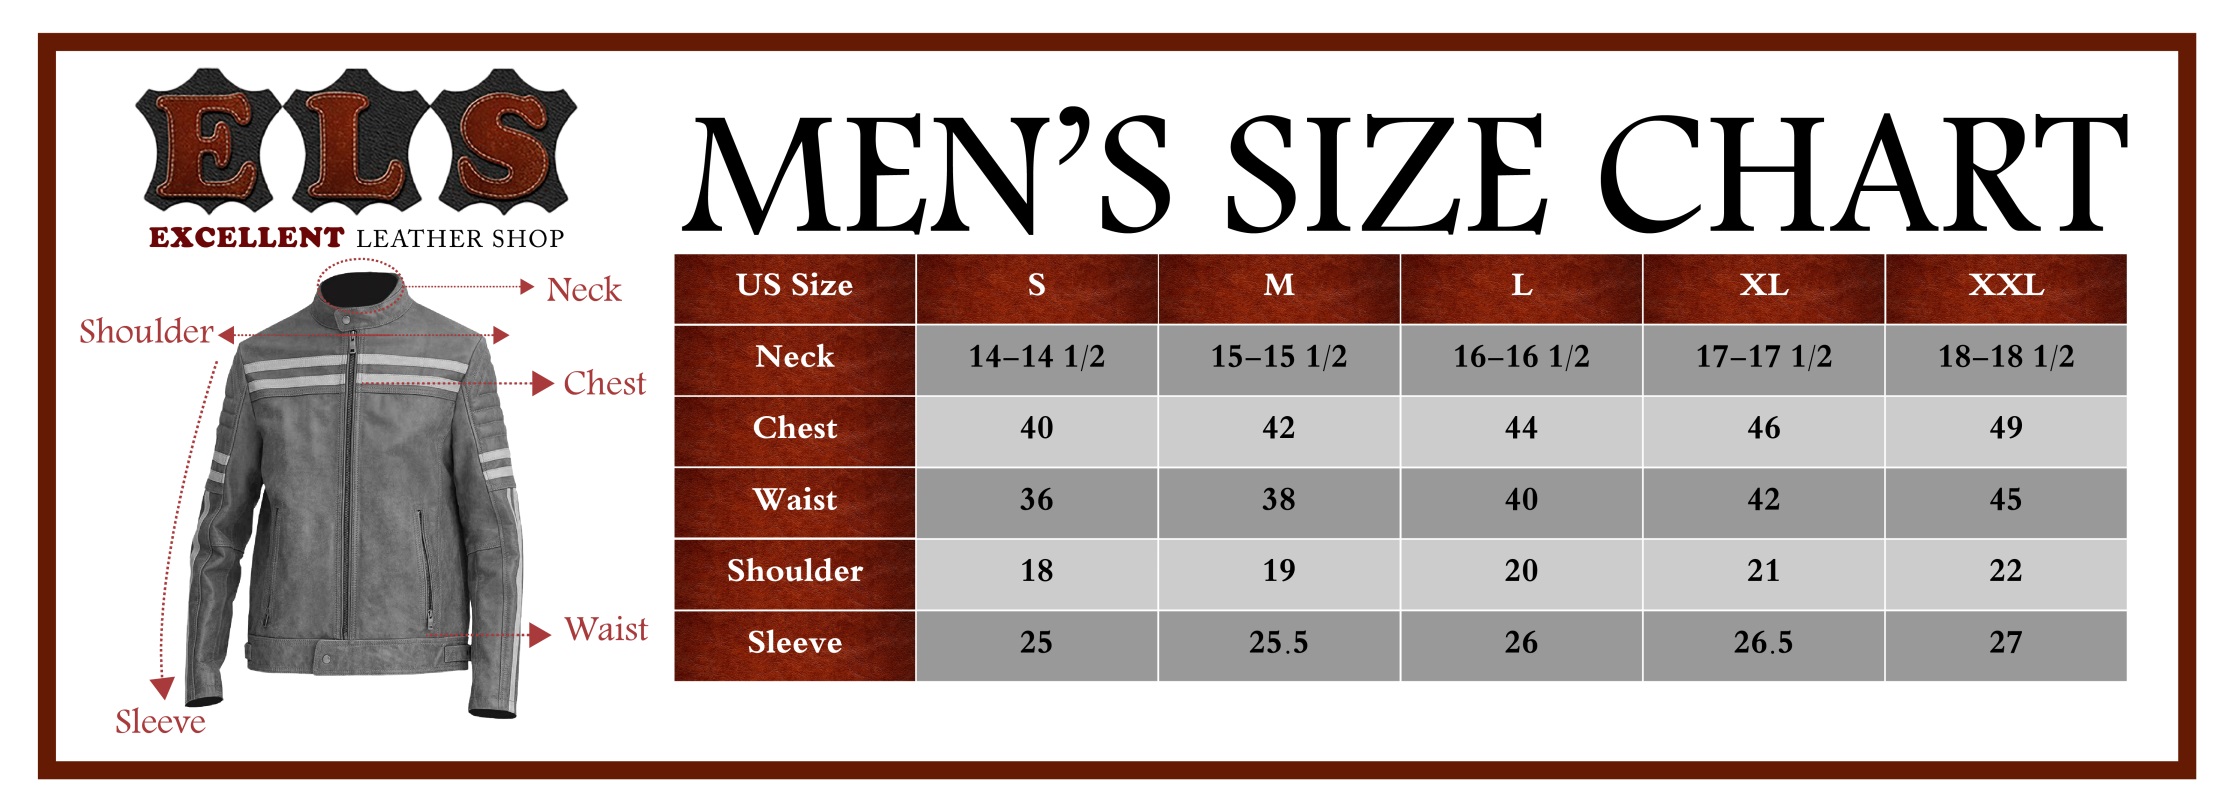 mens-size-chart-new.jpg